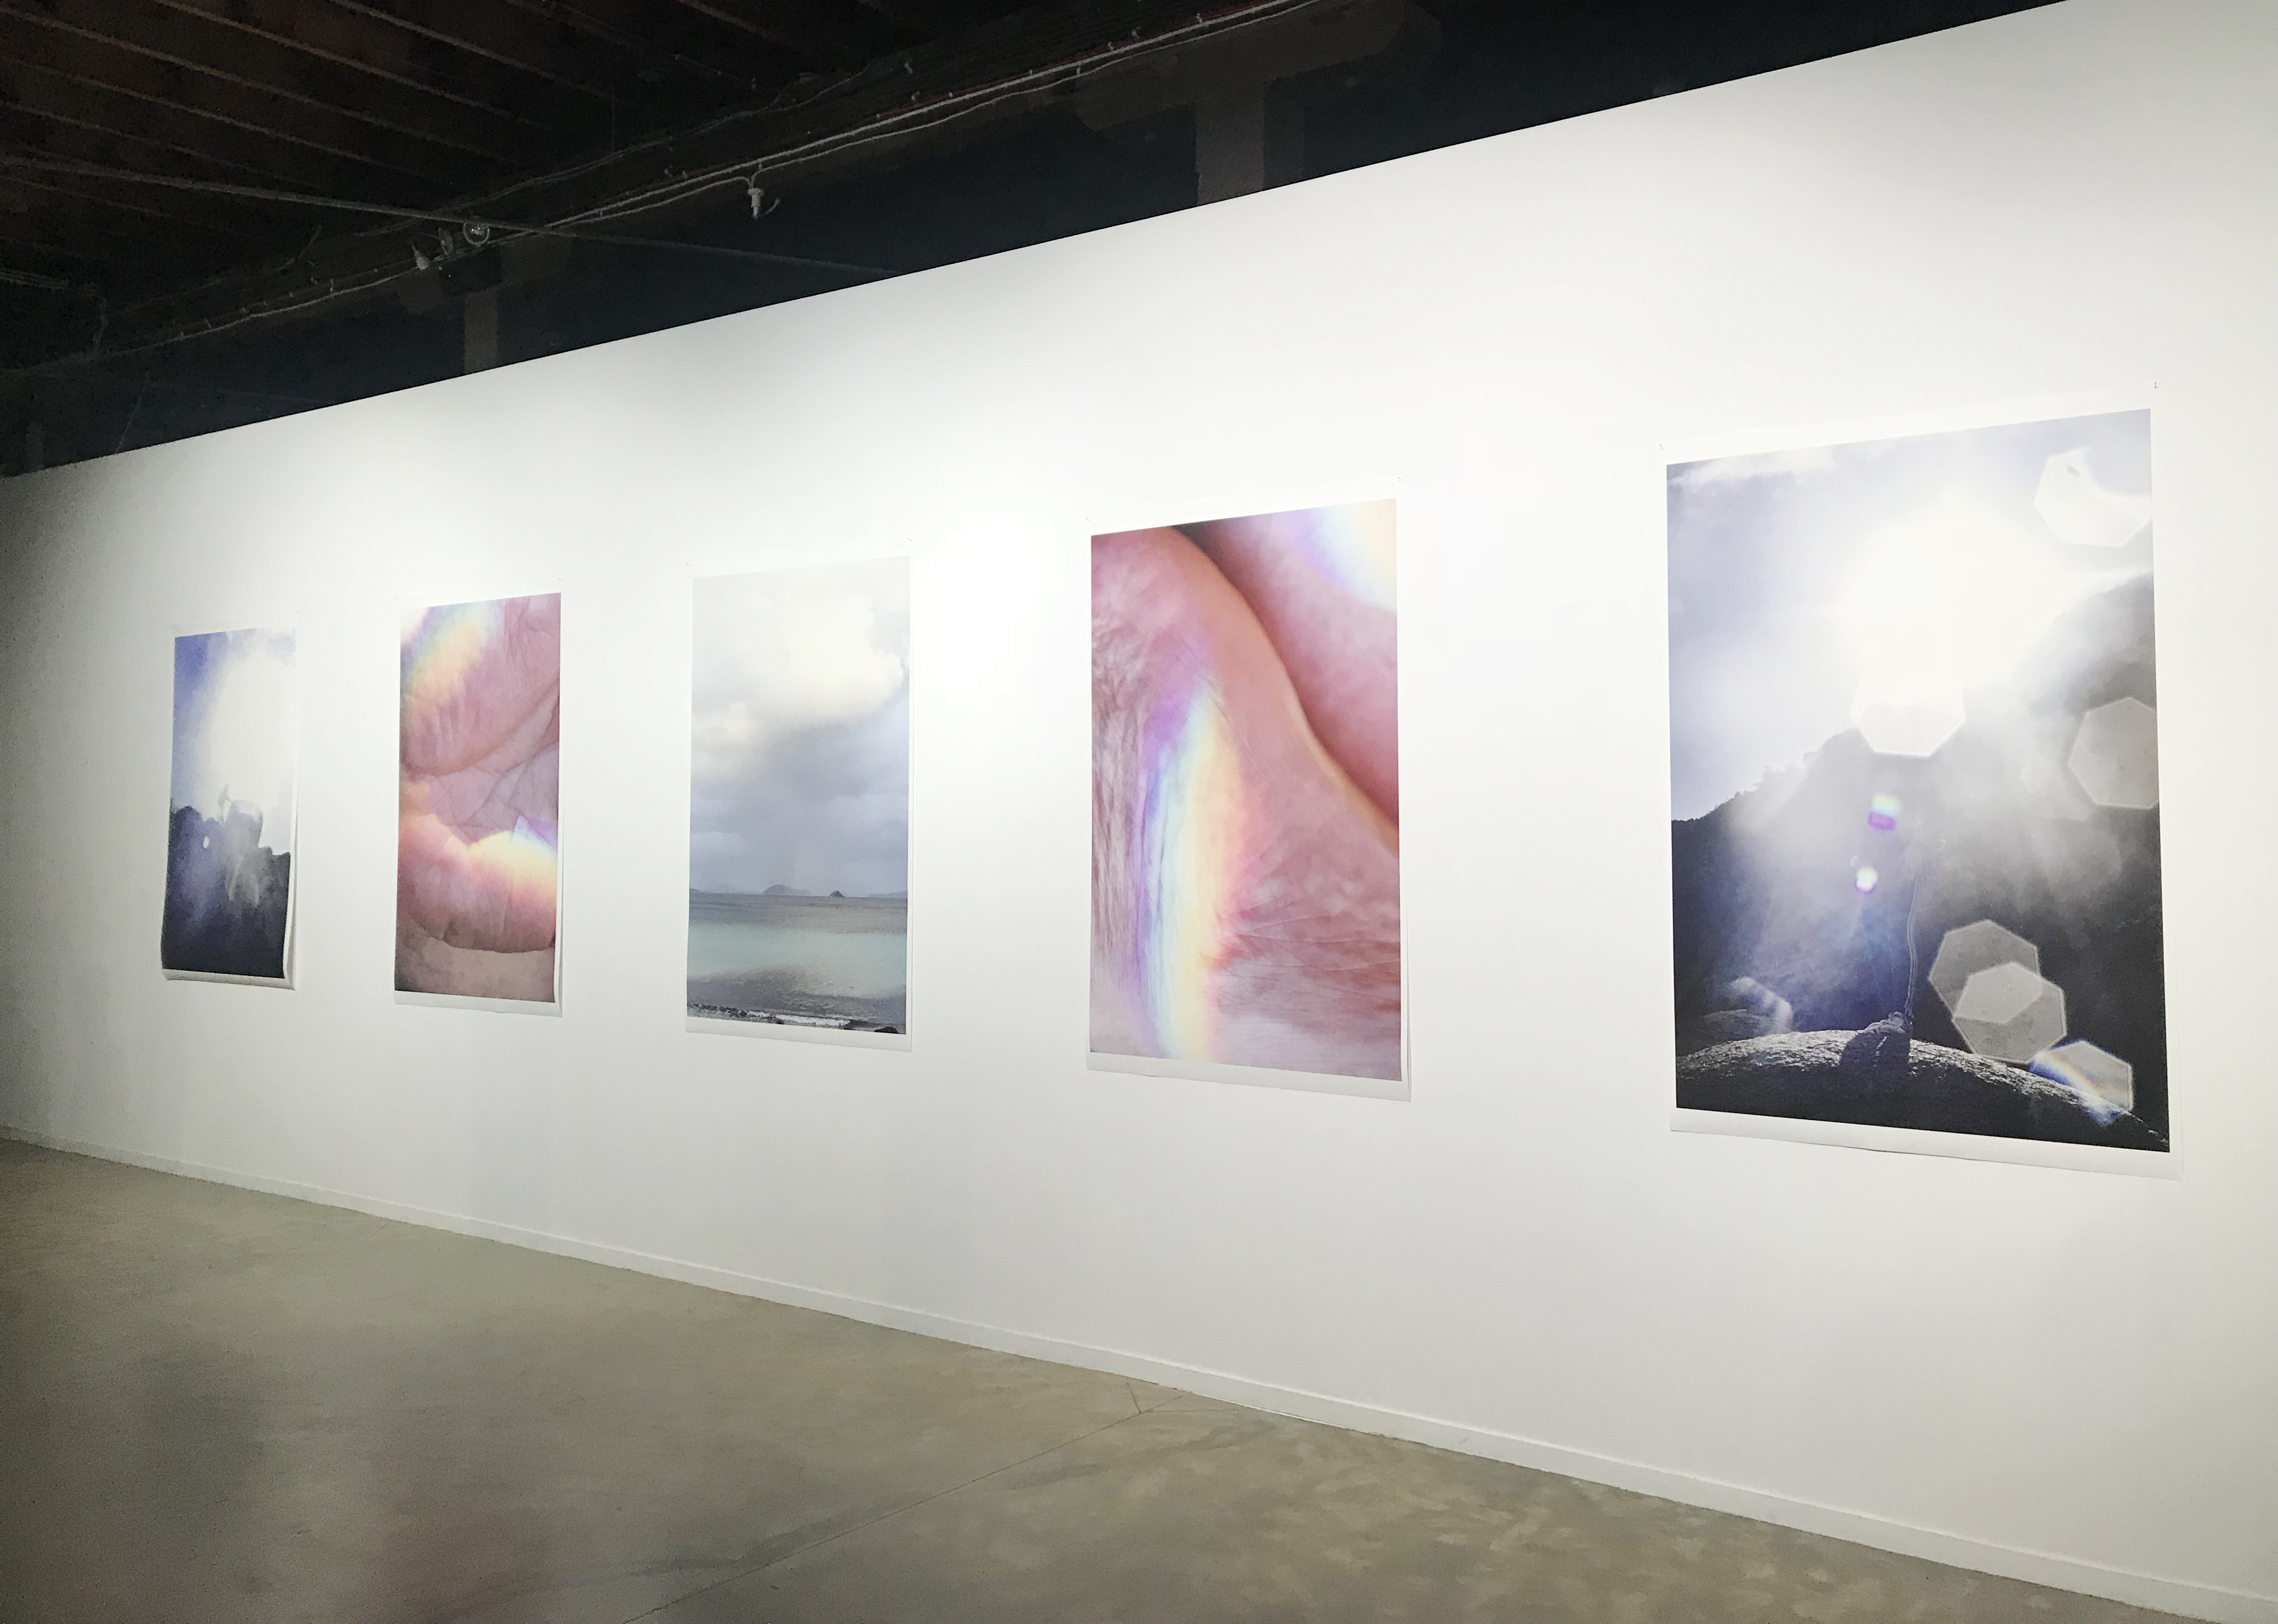 Toni Wilkinson, Imaginary Territories, PSArtspace installation view of Shot into the Sun series, 2020